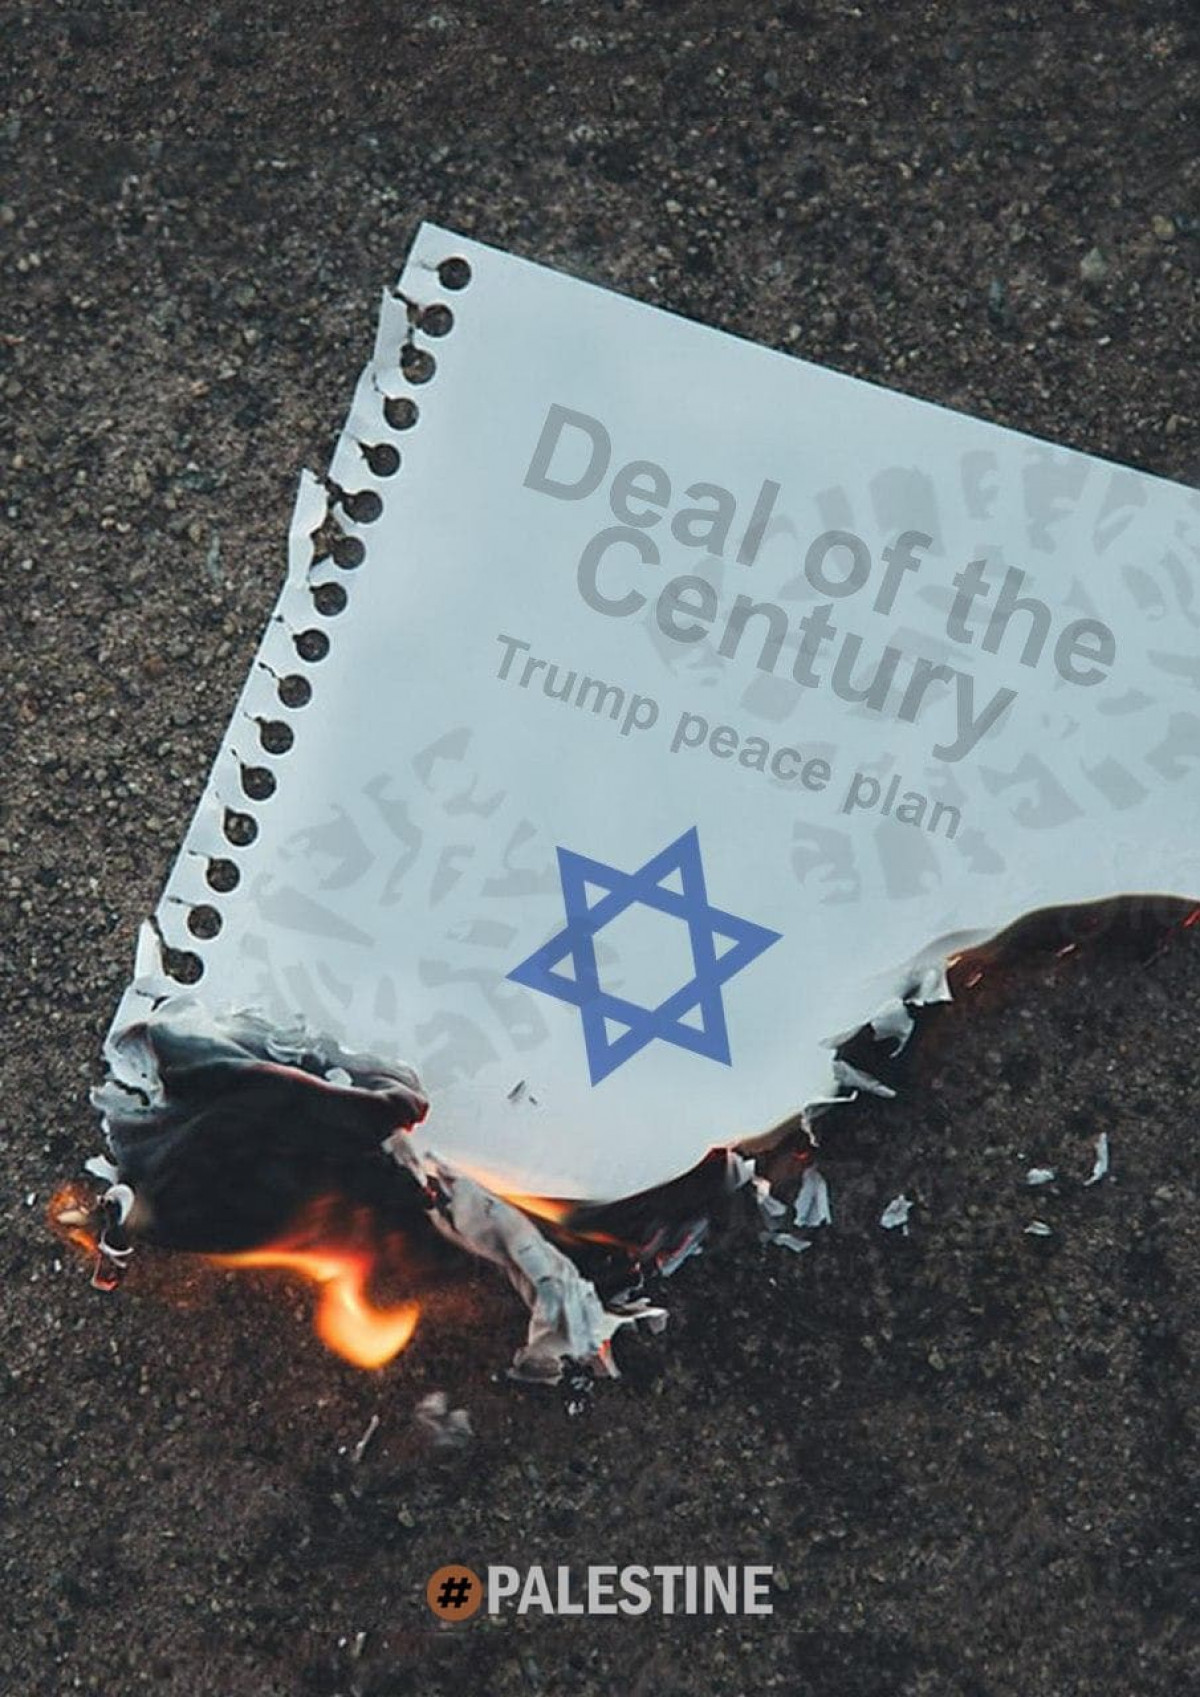 Deal of the Century Trump peace plan